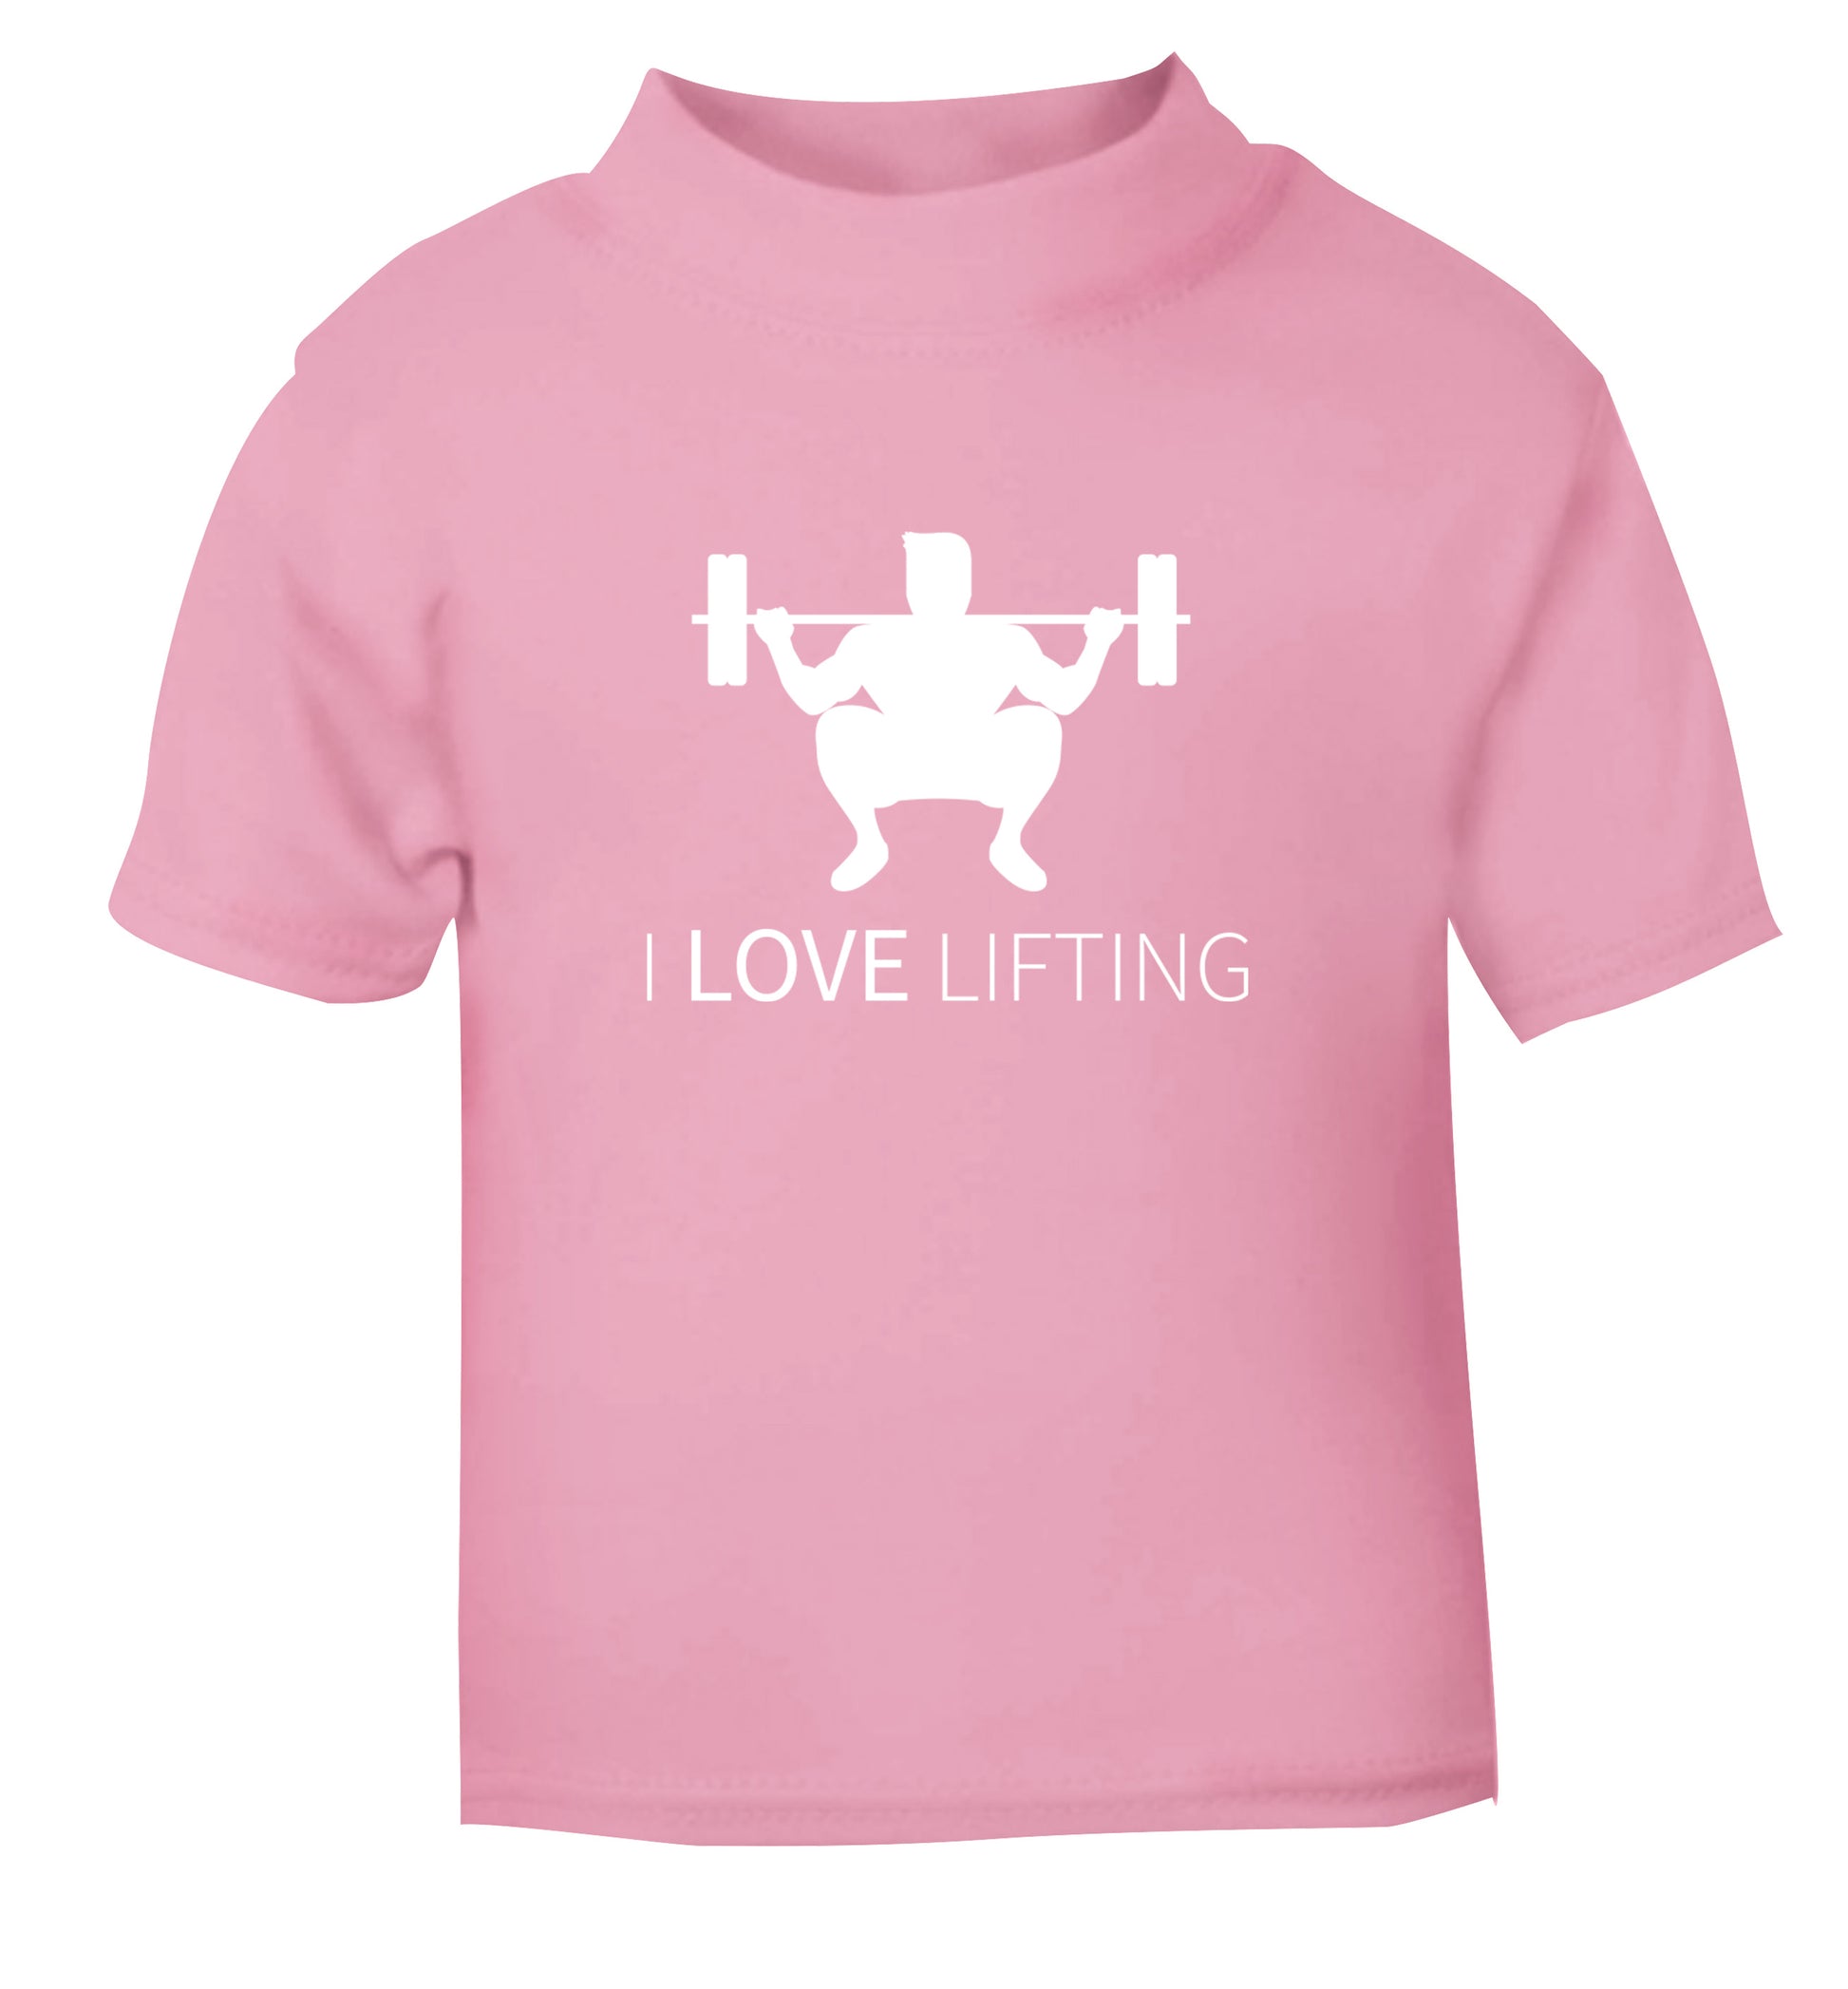 I Love Lifting light pink Baby Toddler Tshirt 2 Years